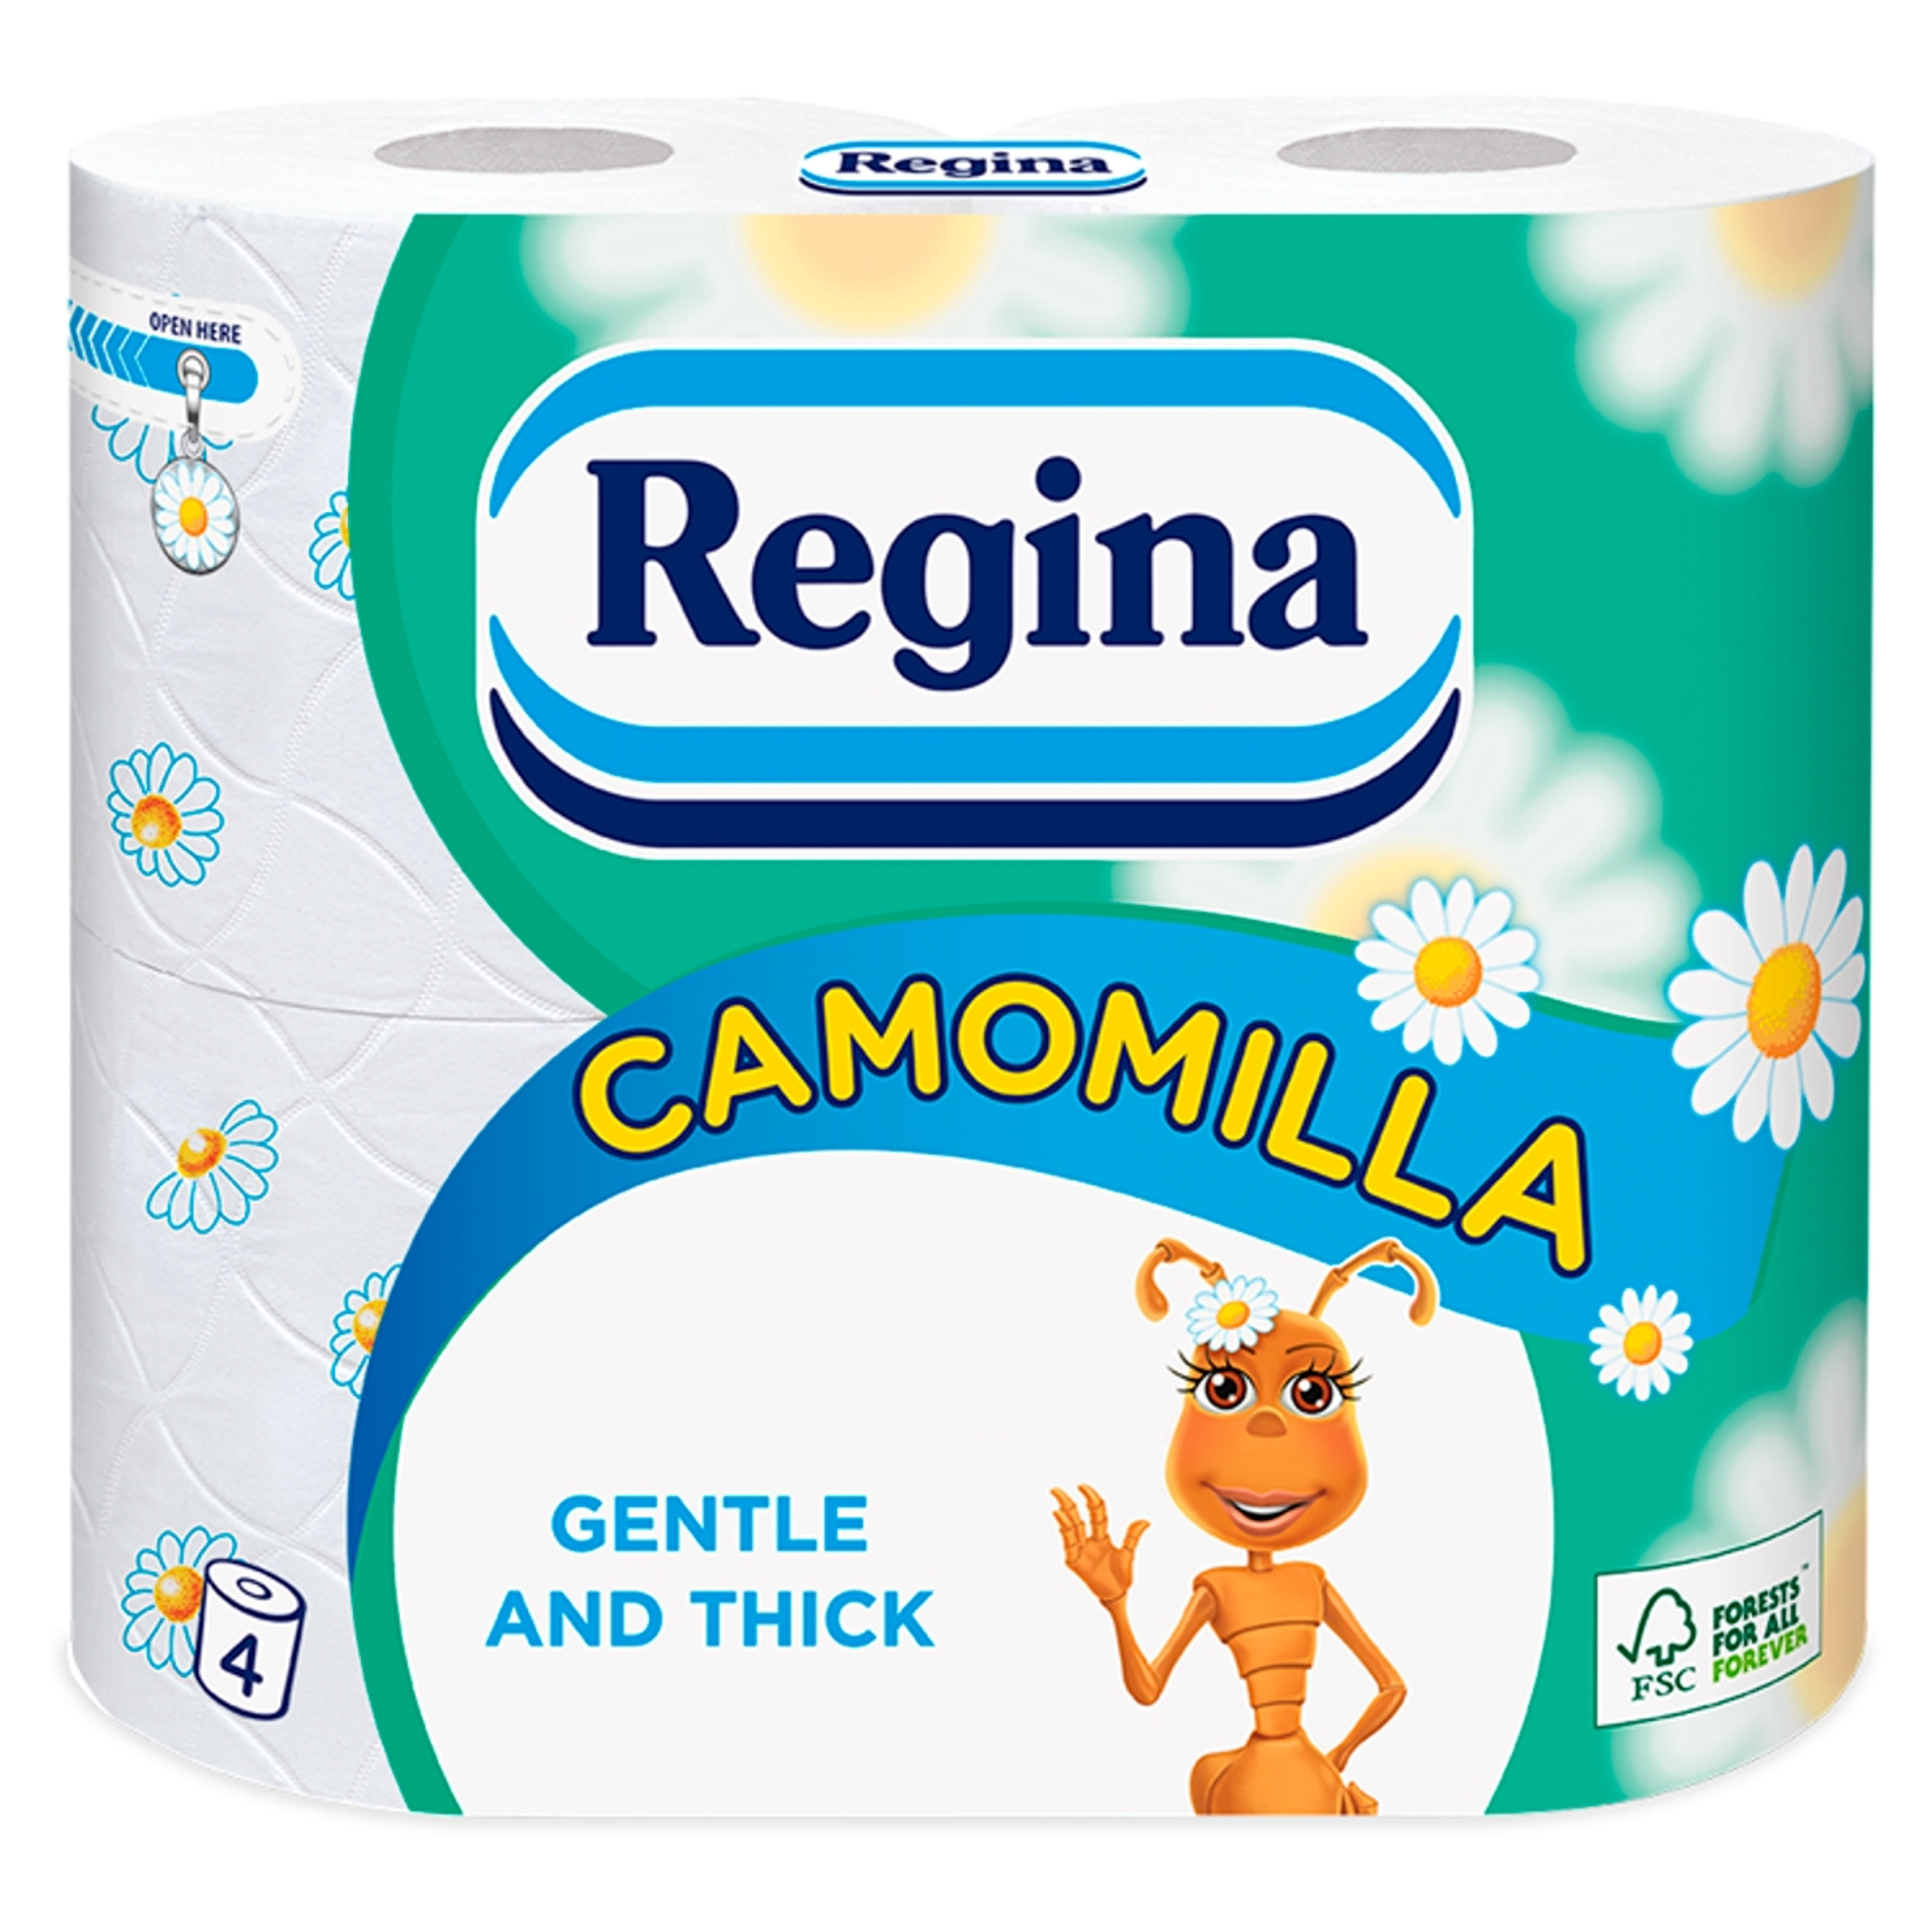 Regina Camomilla 3 rétegű toalettpapír - 4 db